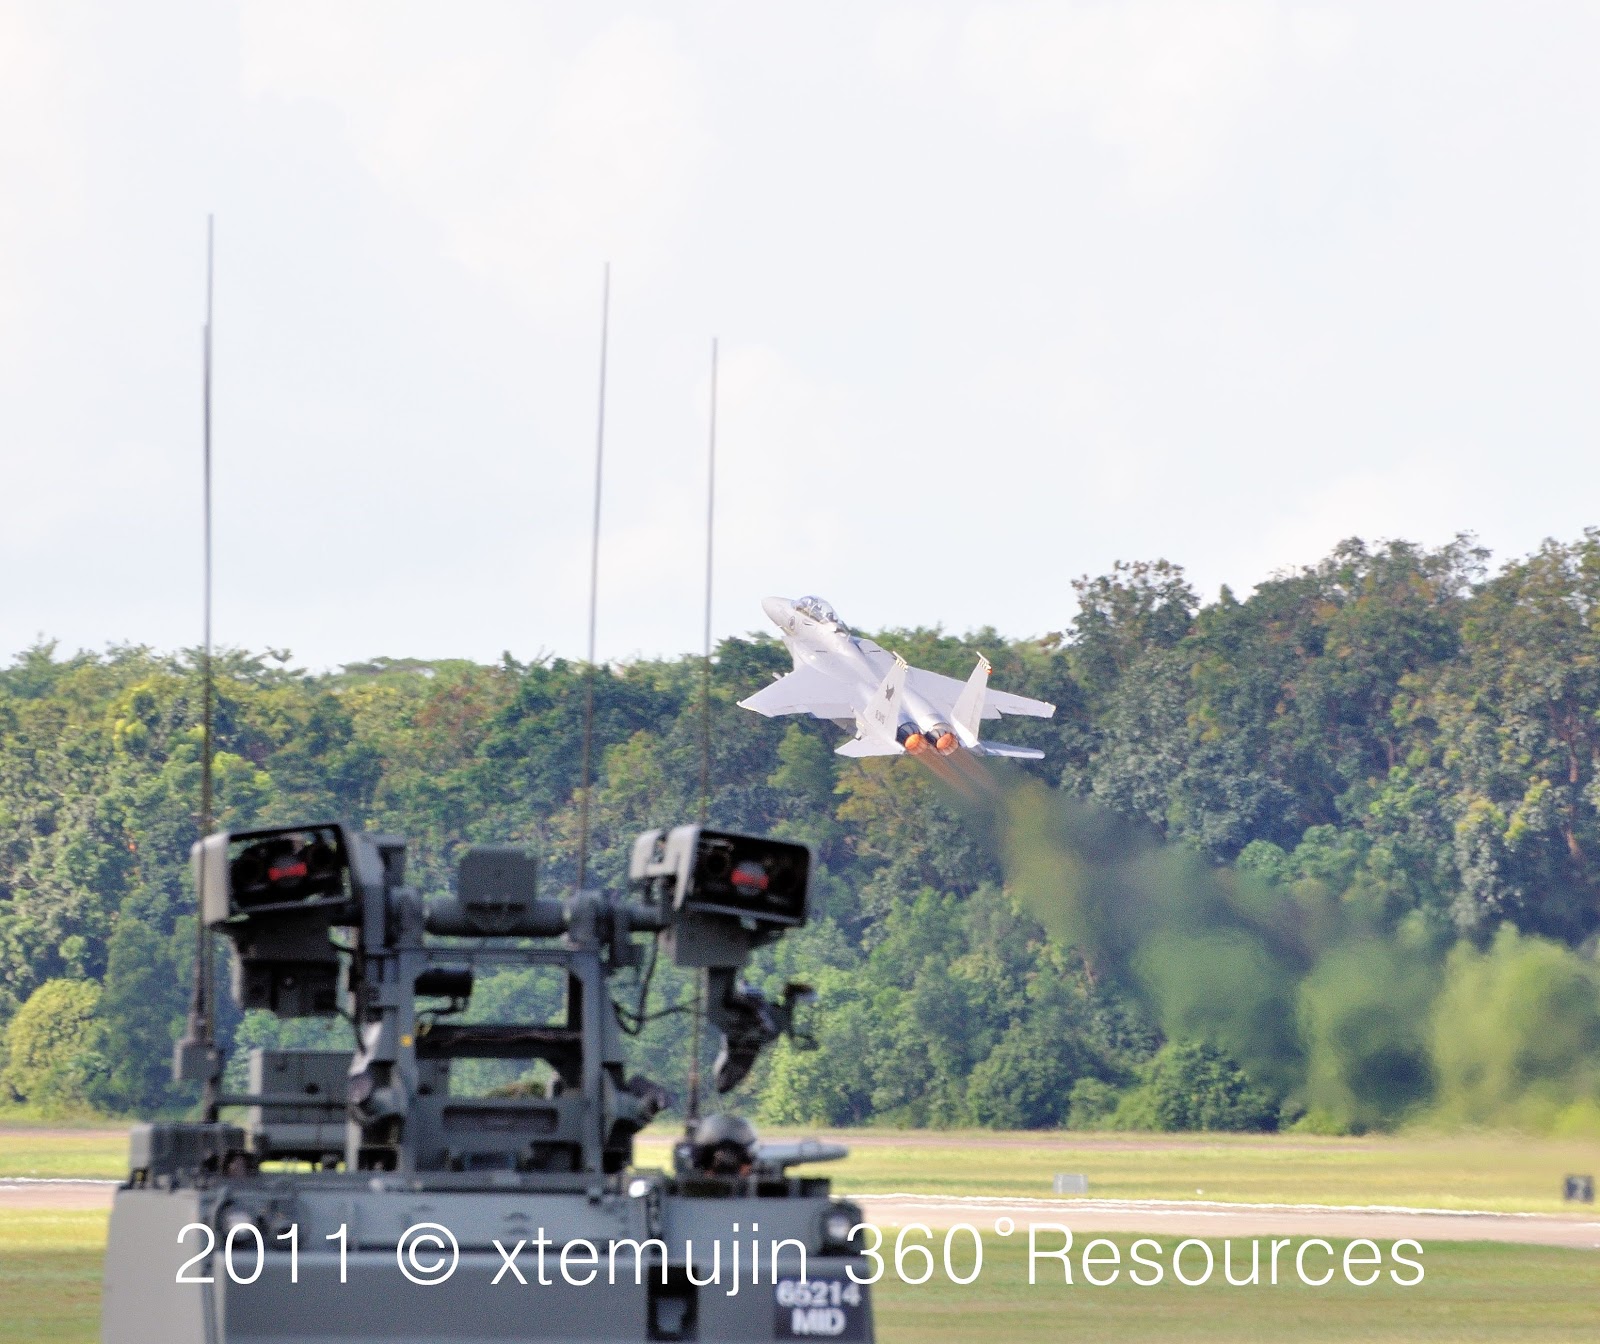 Senang Diri: RSAF Open House 2011: Republic of Singapore Air Force ...